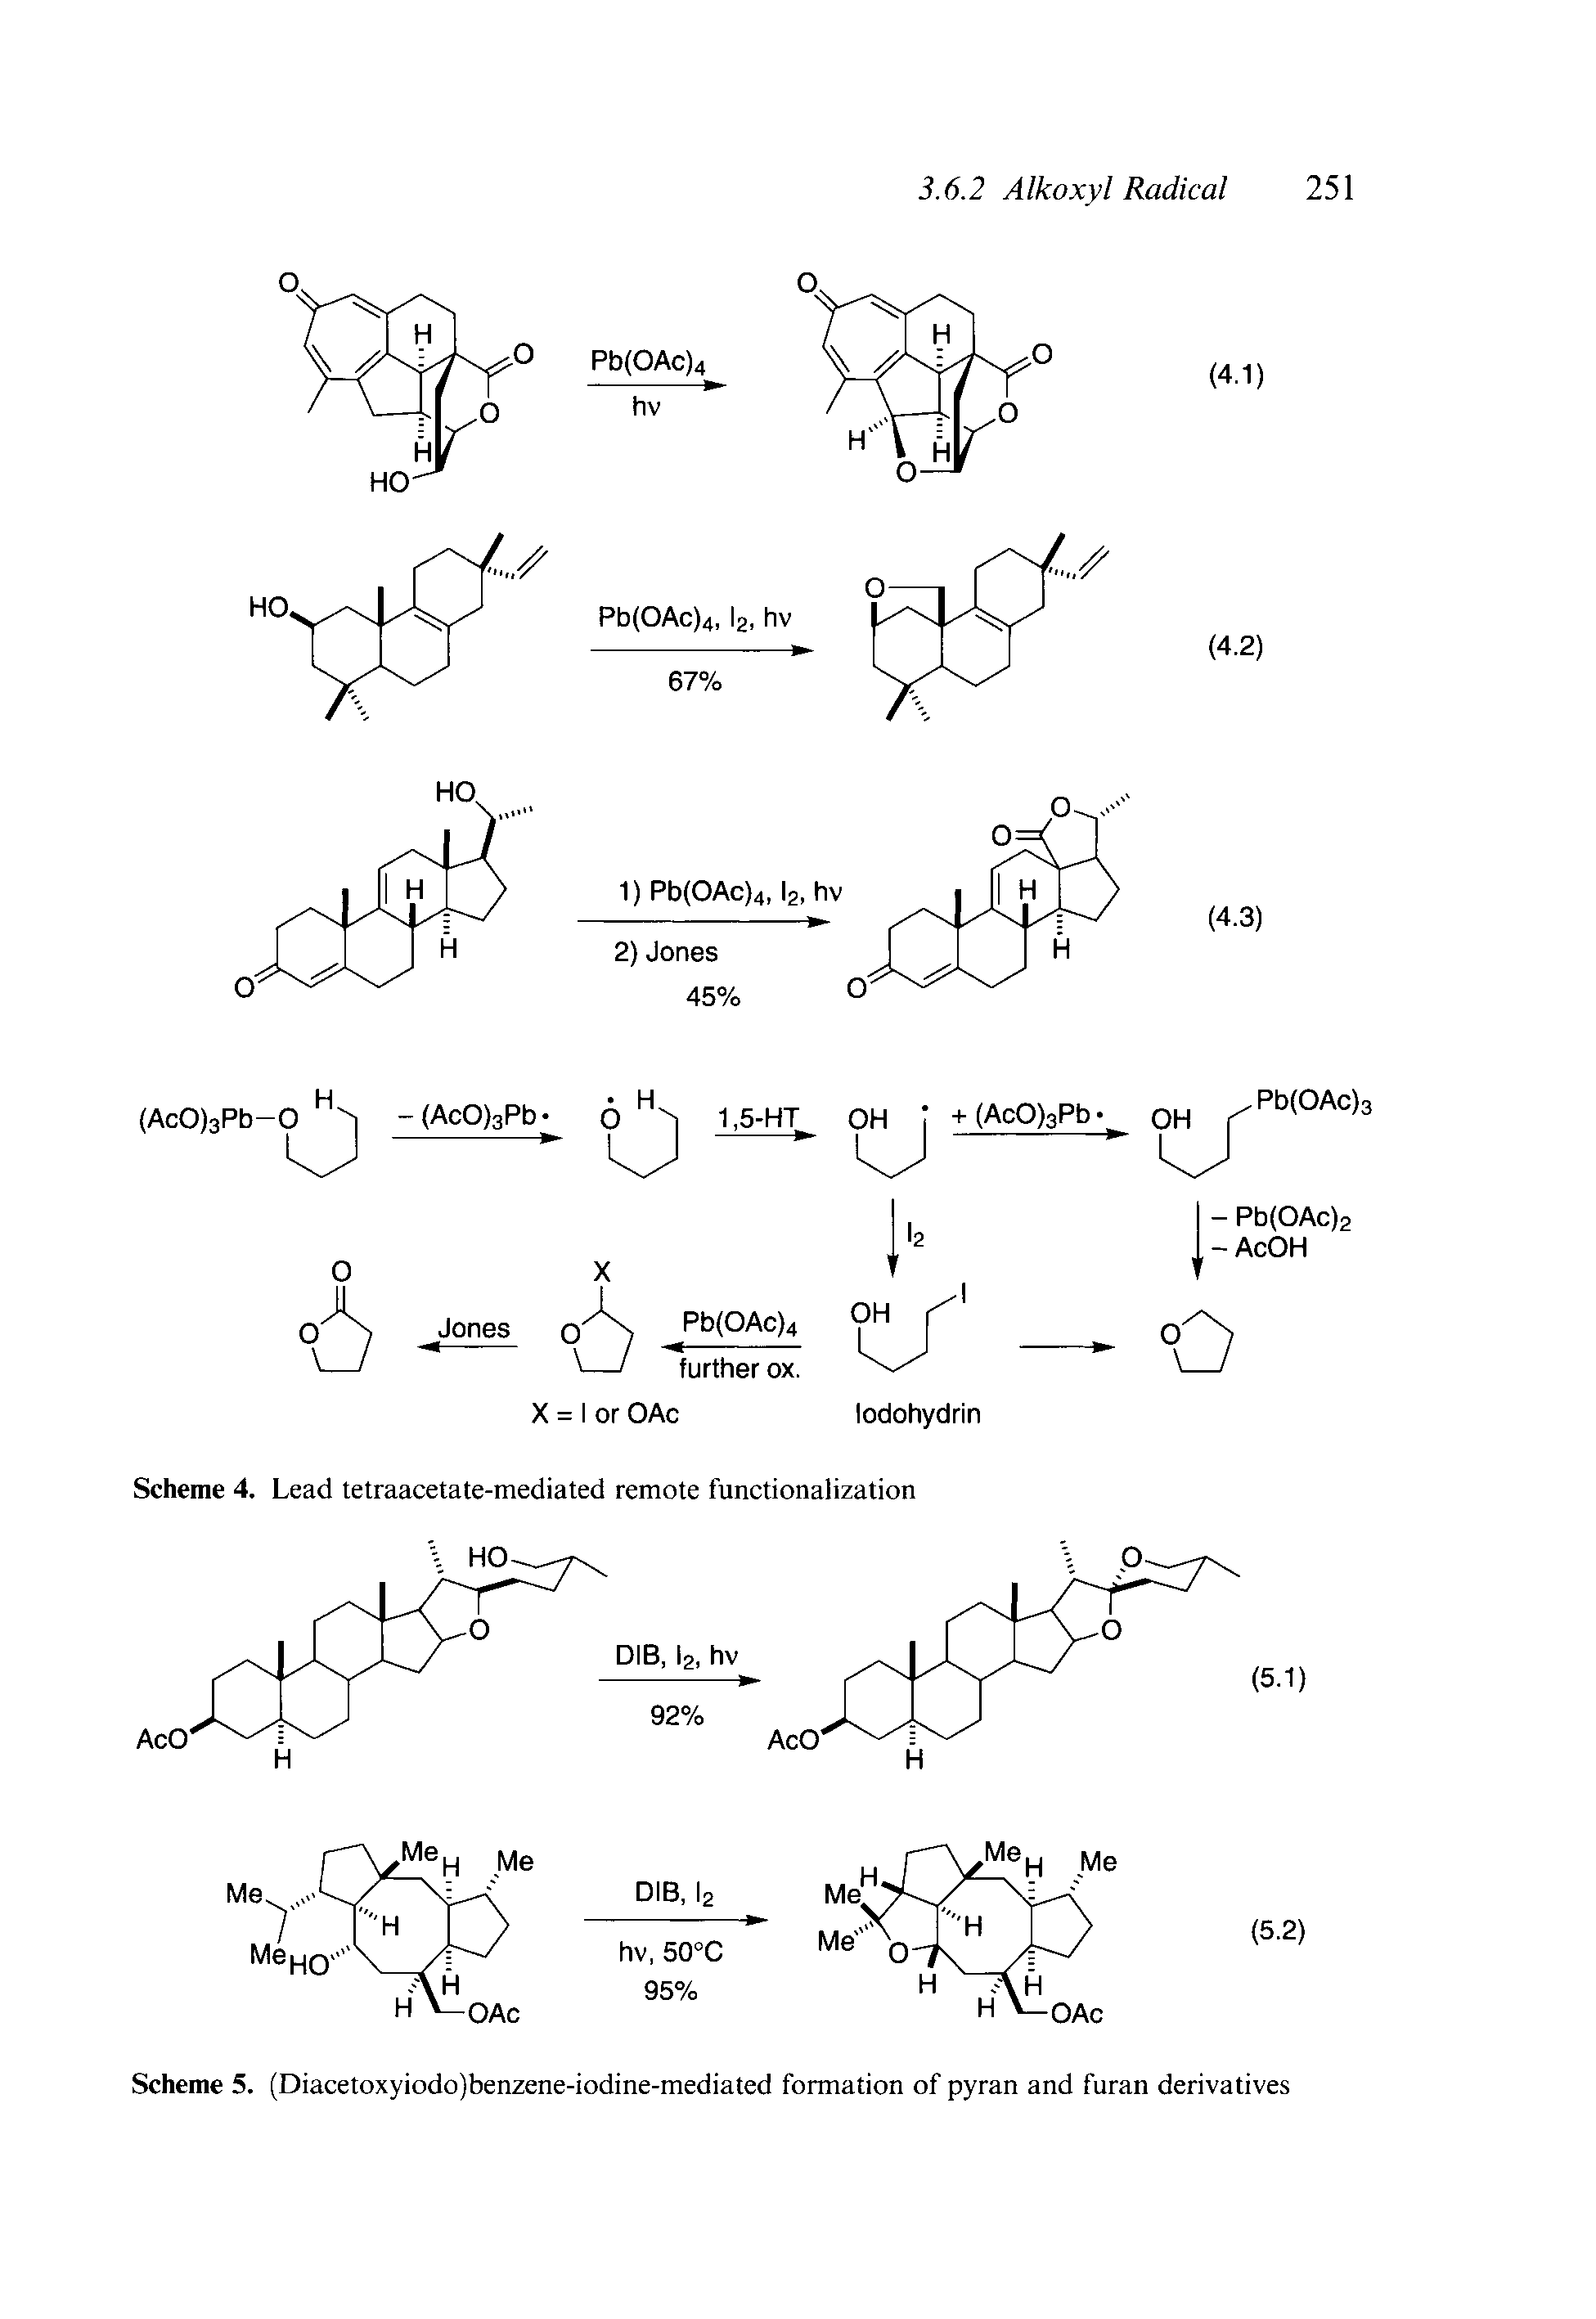 Scheme 5. (Diacetoxyiodo)benzene-iodine-mediated formation of pyran and furan derivatives...